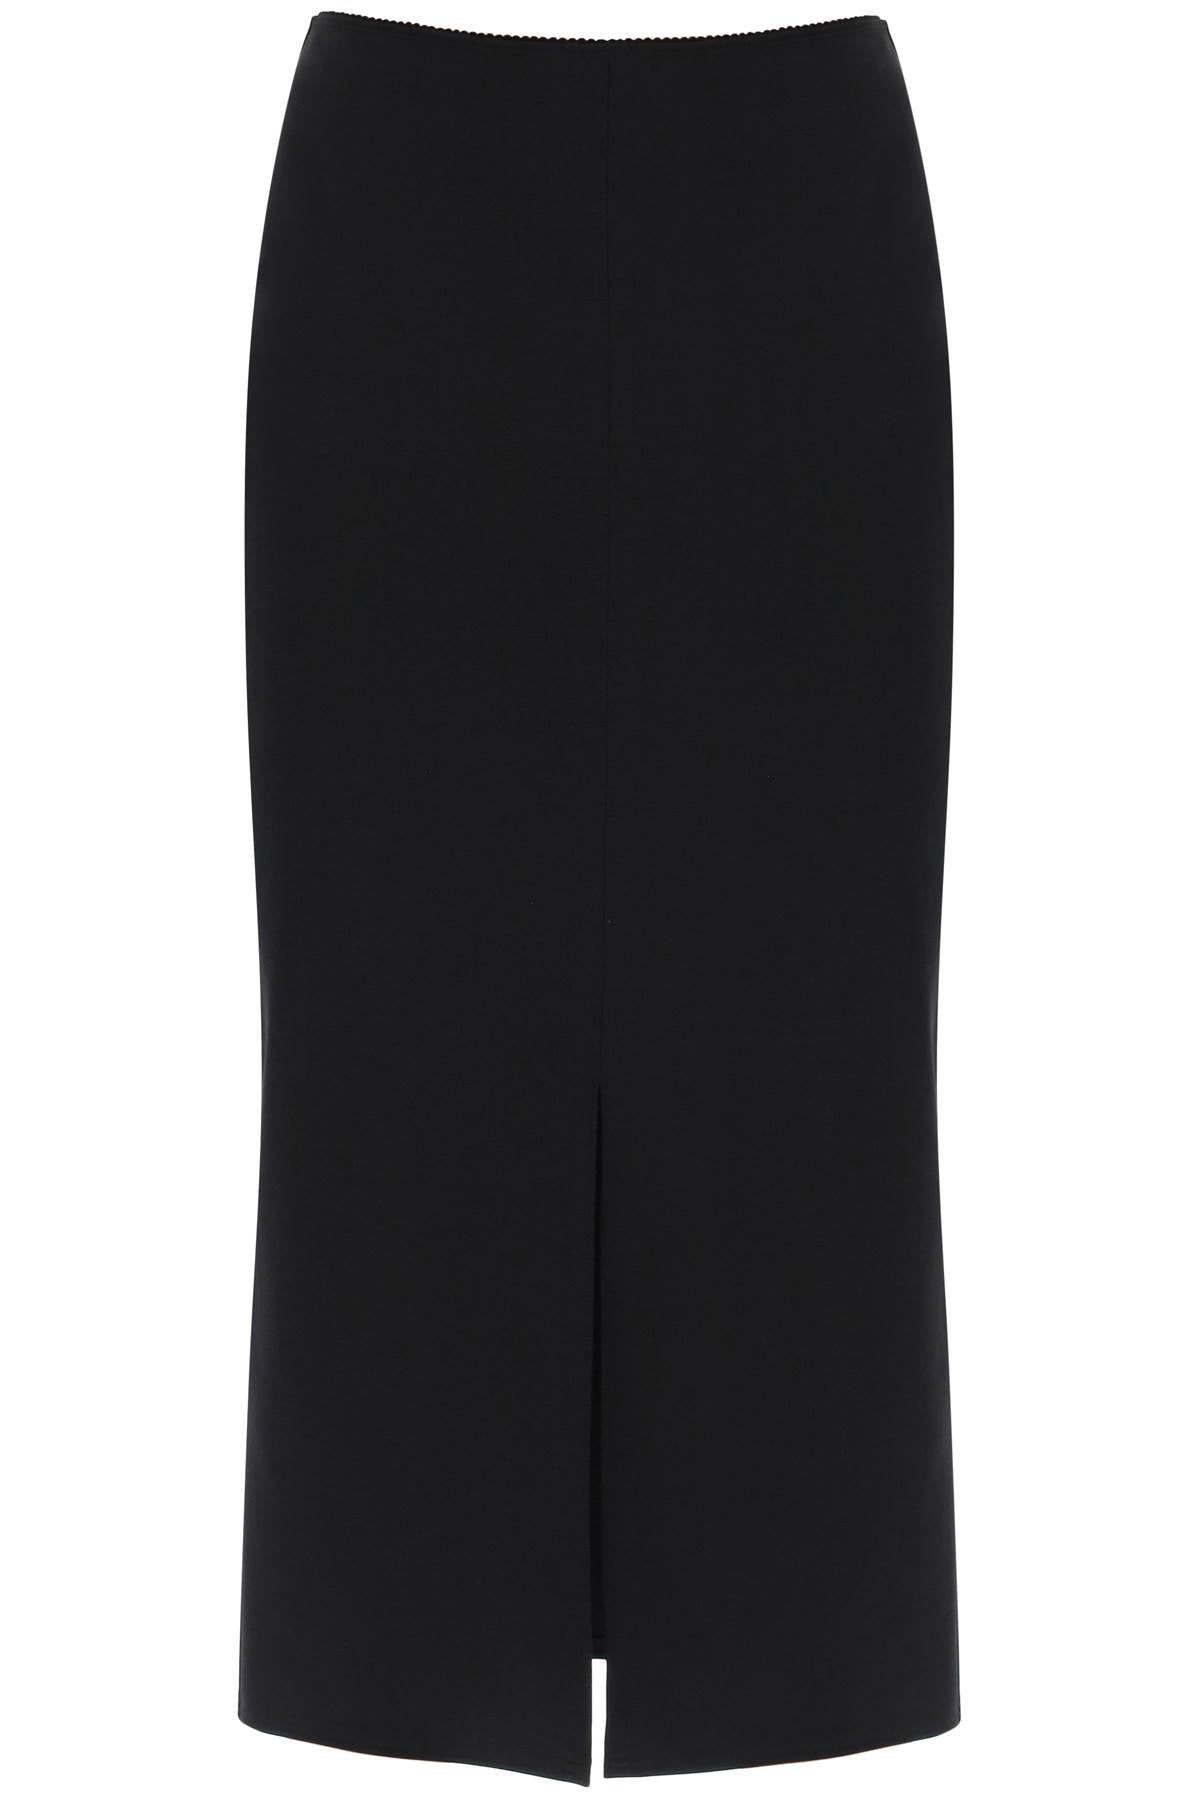 Dolce & Gabbana Milano Stitch Pencil Skirt   Black